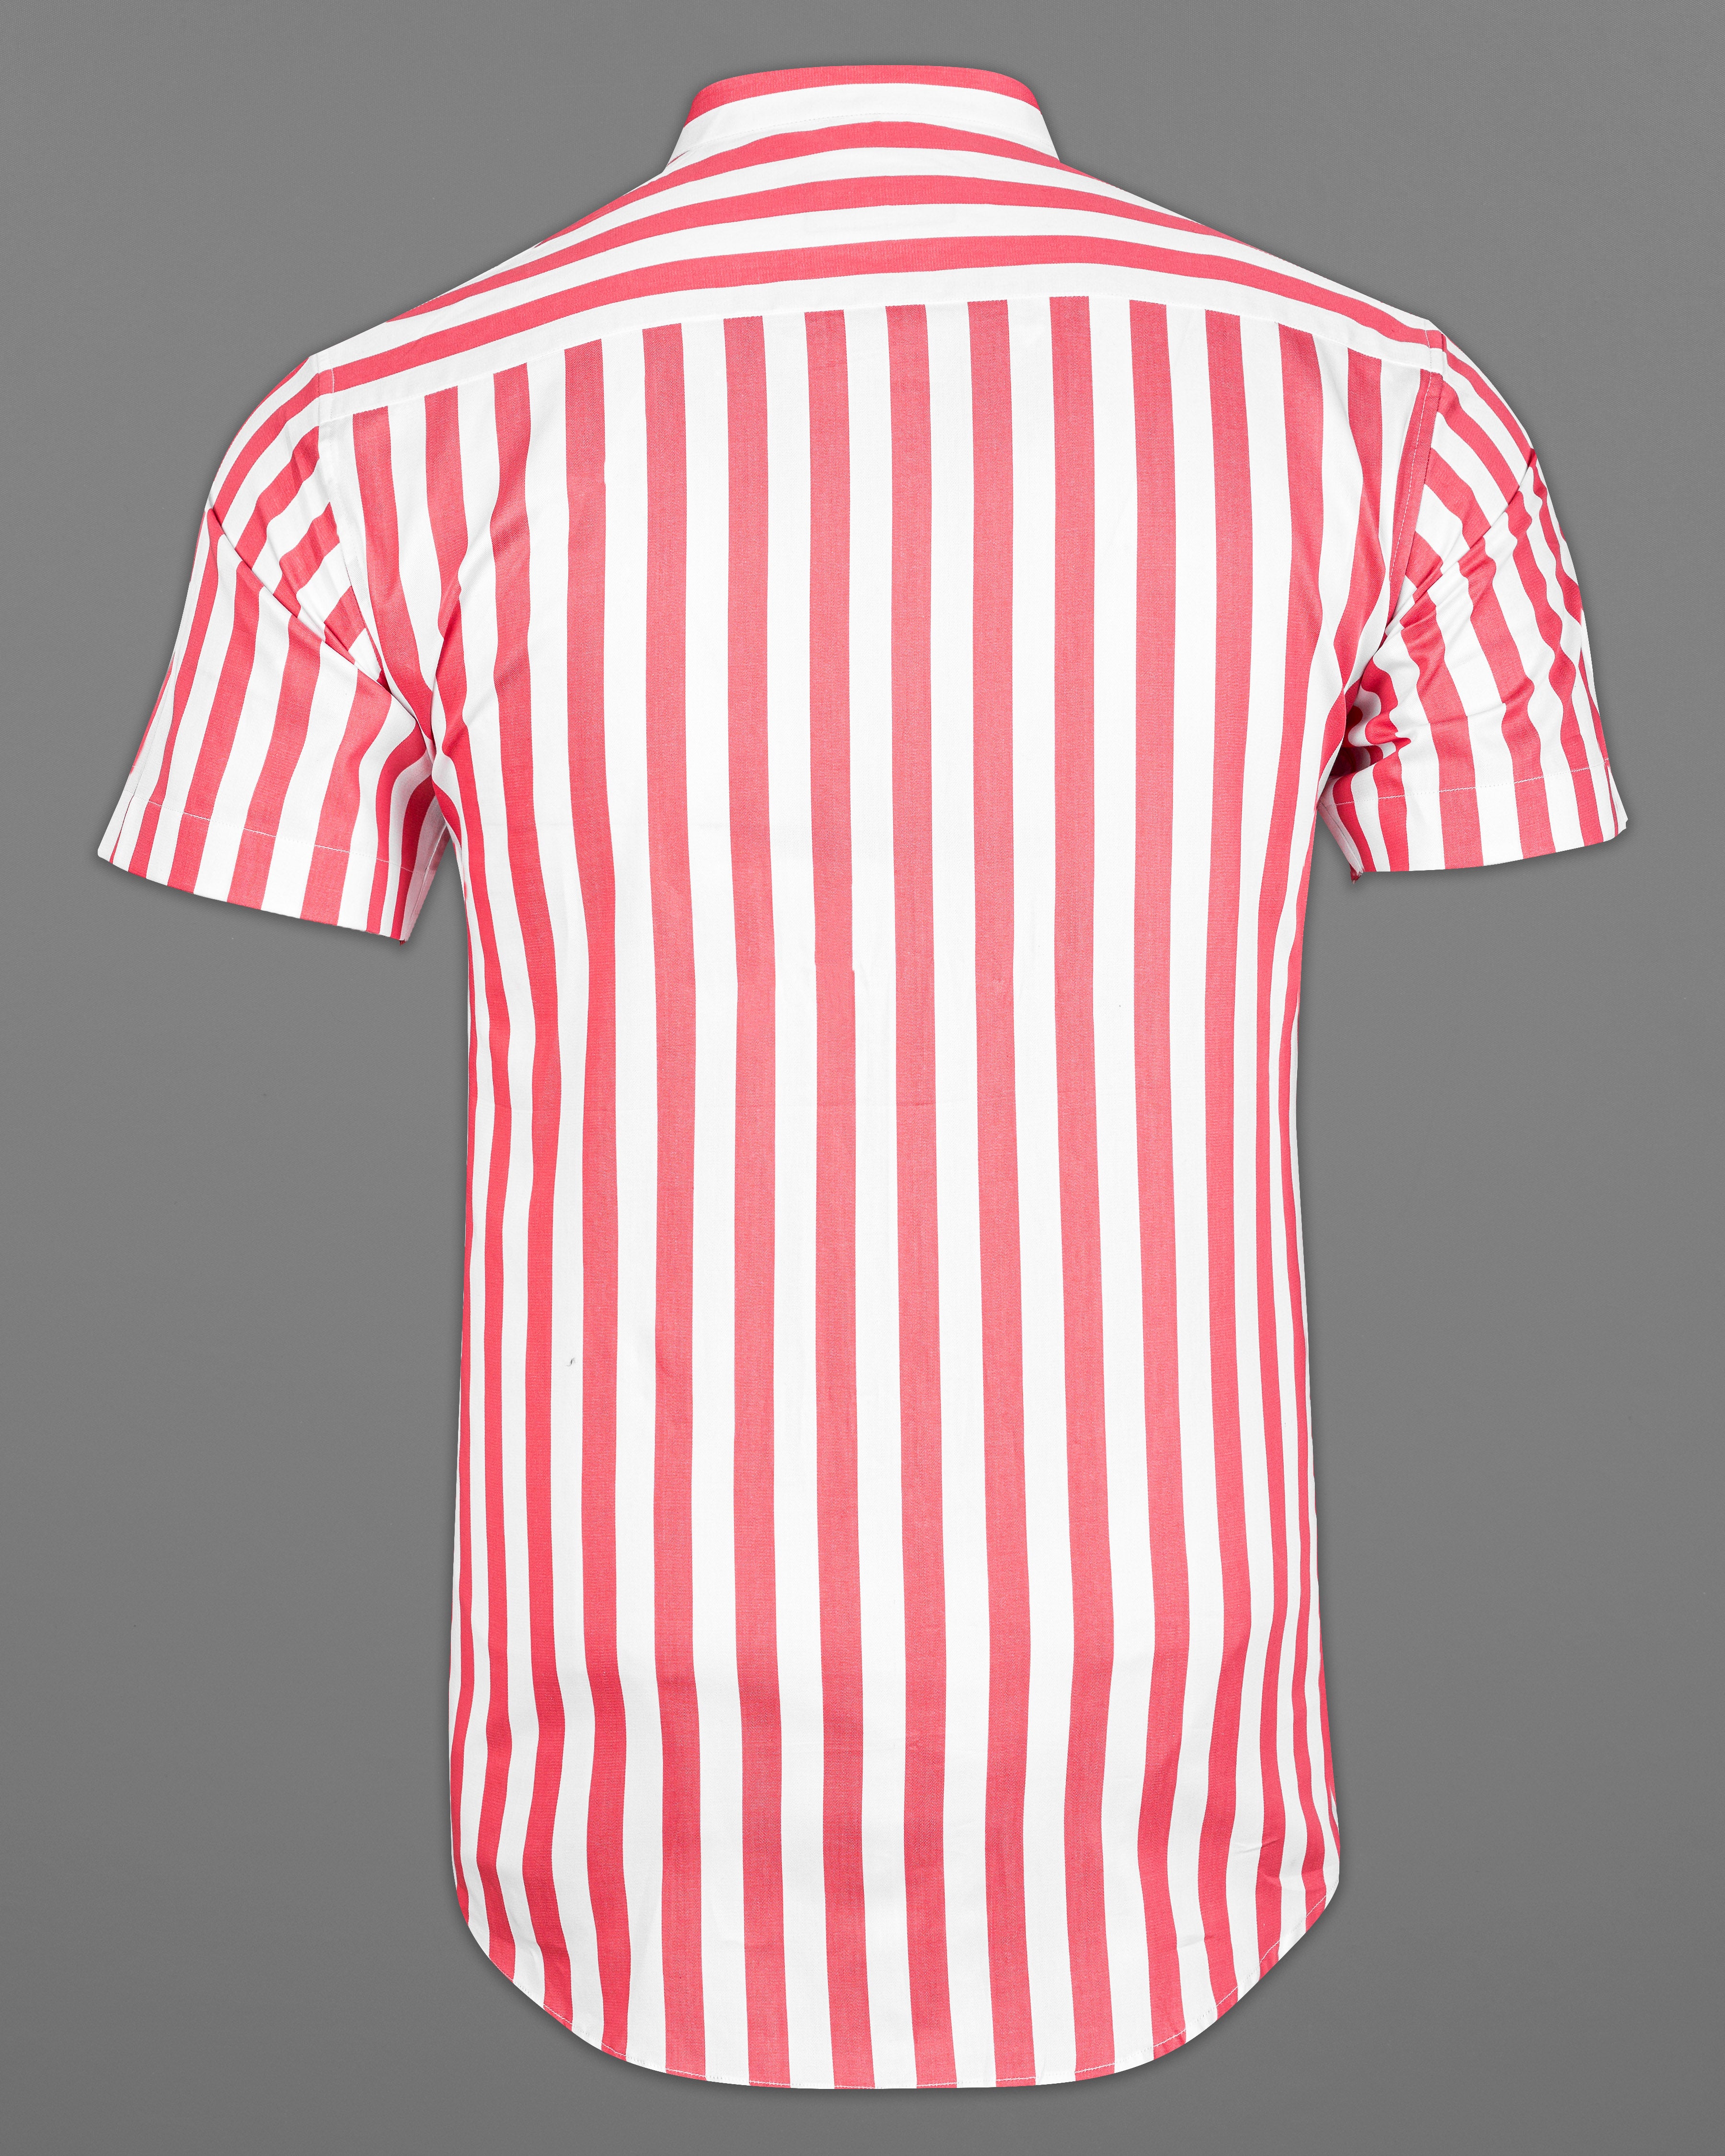 Geraldine Pink and White Striped Twill Premium Cotton Half Sleeved Shirt 9700-CC-BLK-SS-38, 9700-CC-BLK-SS-39, 9700-CC-BLK-SS-40, 9700-CC-BLK-SS-42, 9700-CC-BLK-SS-44, 9700-CC-BLK-SS-46, 9700-CC-BLK-SS-48, 9700-CC-BLK-SS-50, 9700-CC-BLK-SS-52